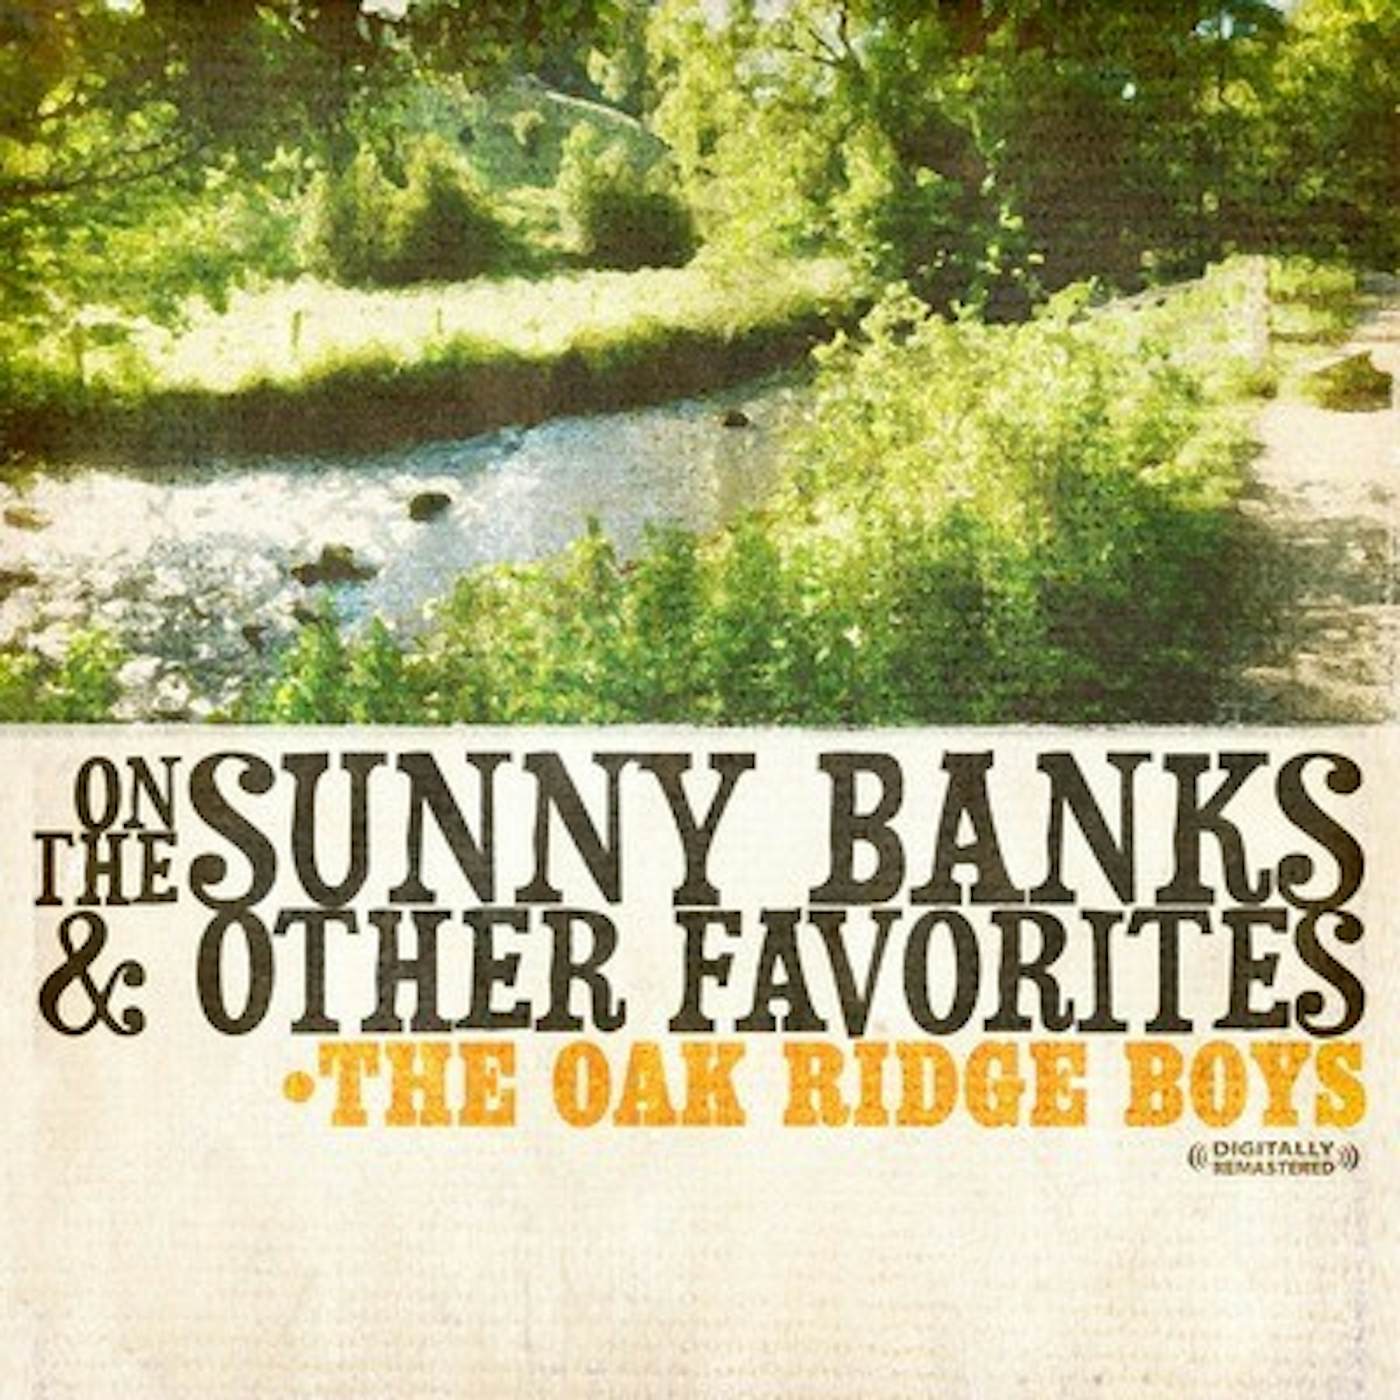 The Oak Ridge Boys ON THE SUNNY BANKS & OTHER FAVORITES CD